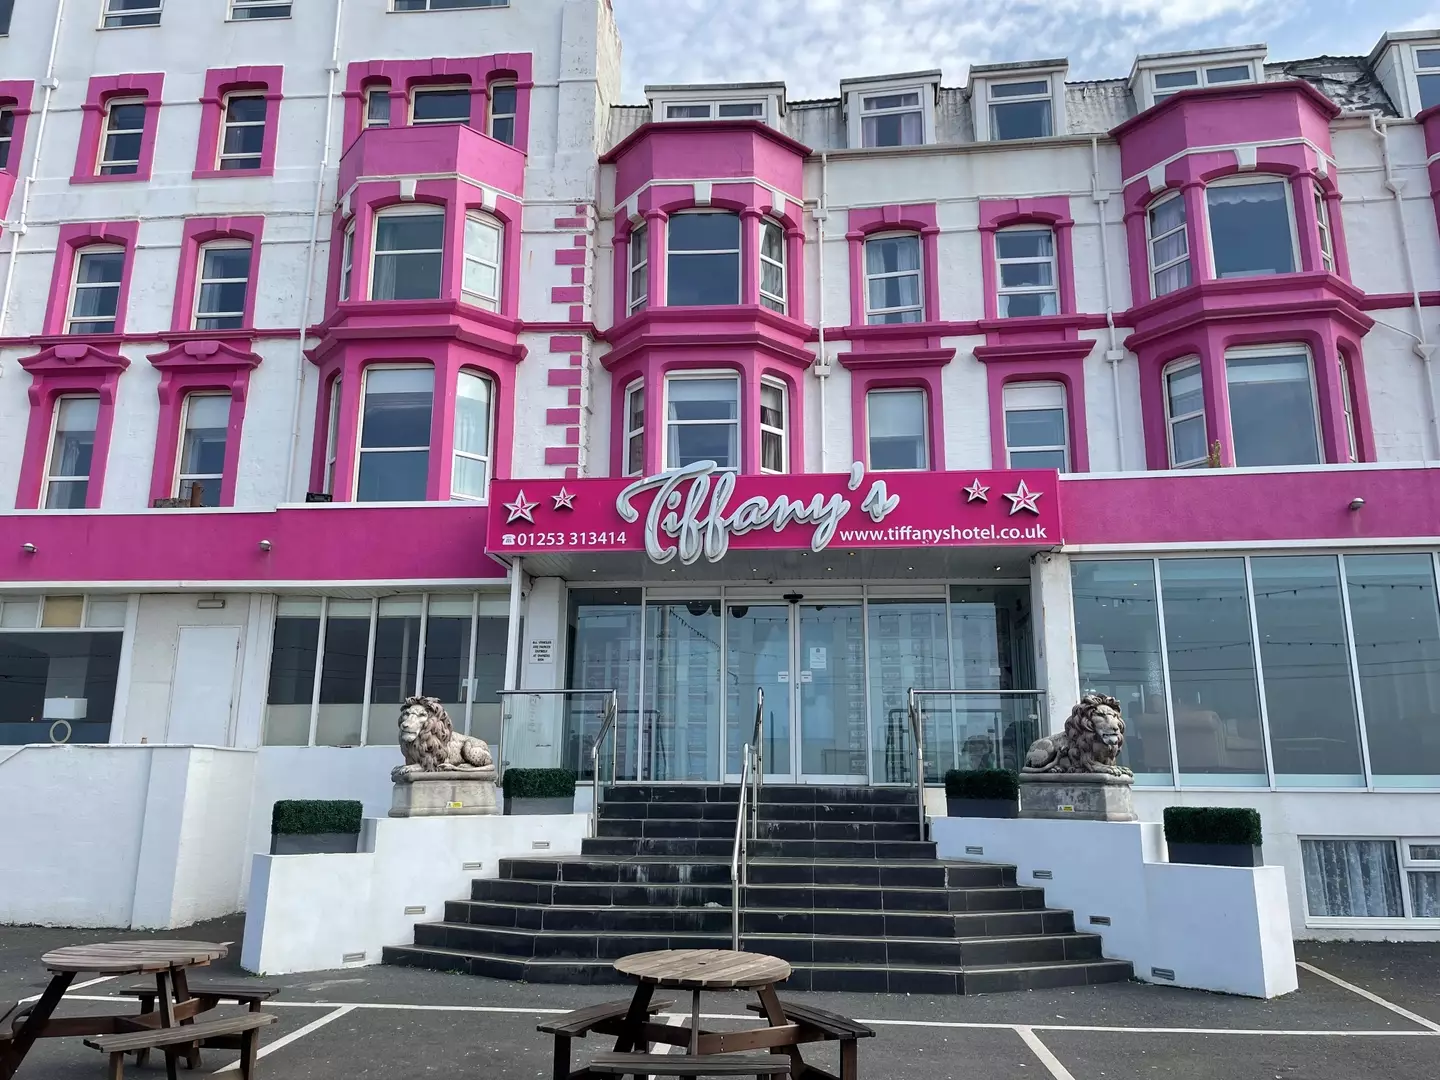 Tiffany's Hotel in Blackpool.